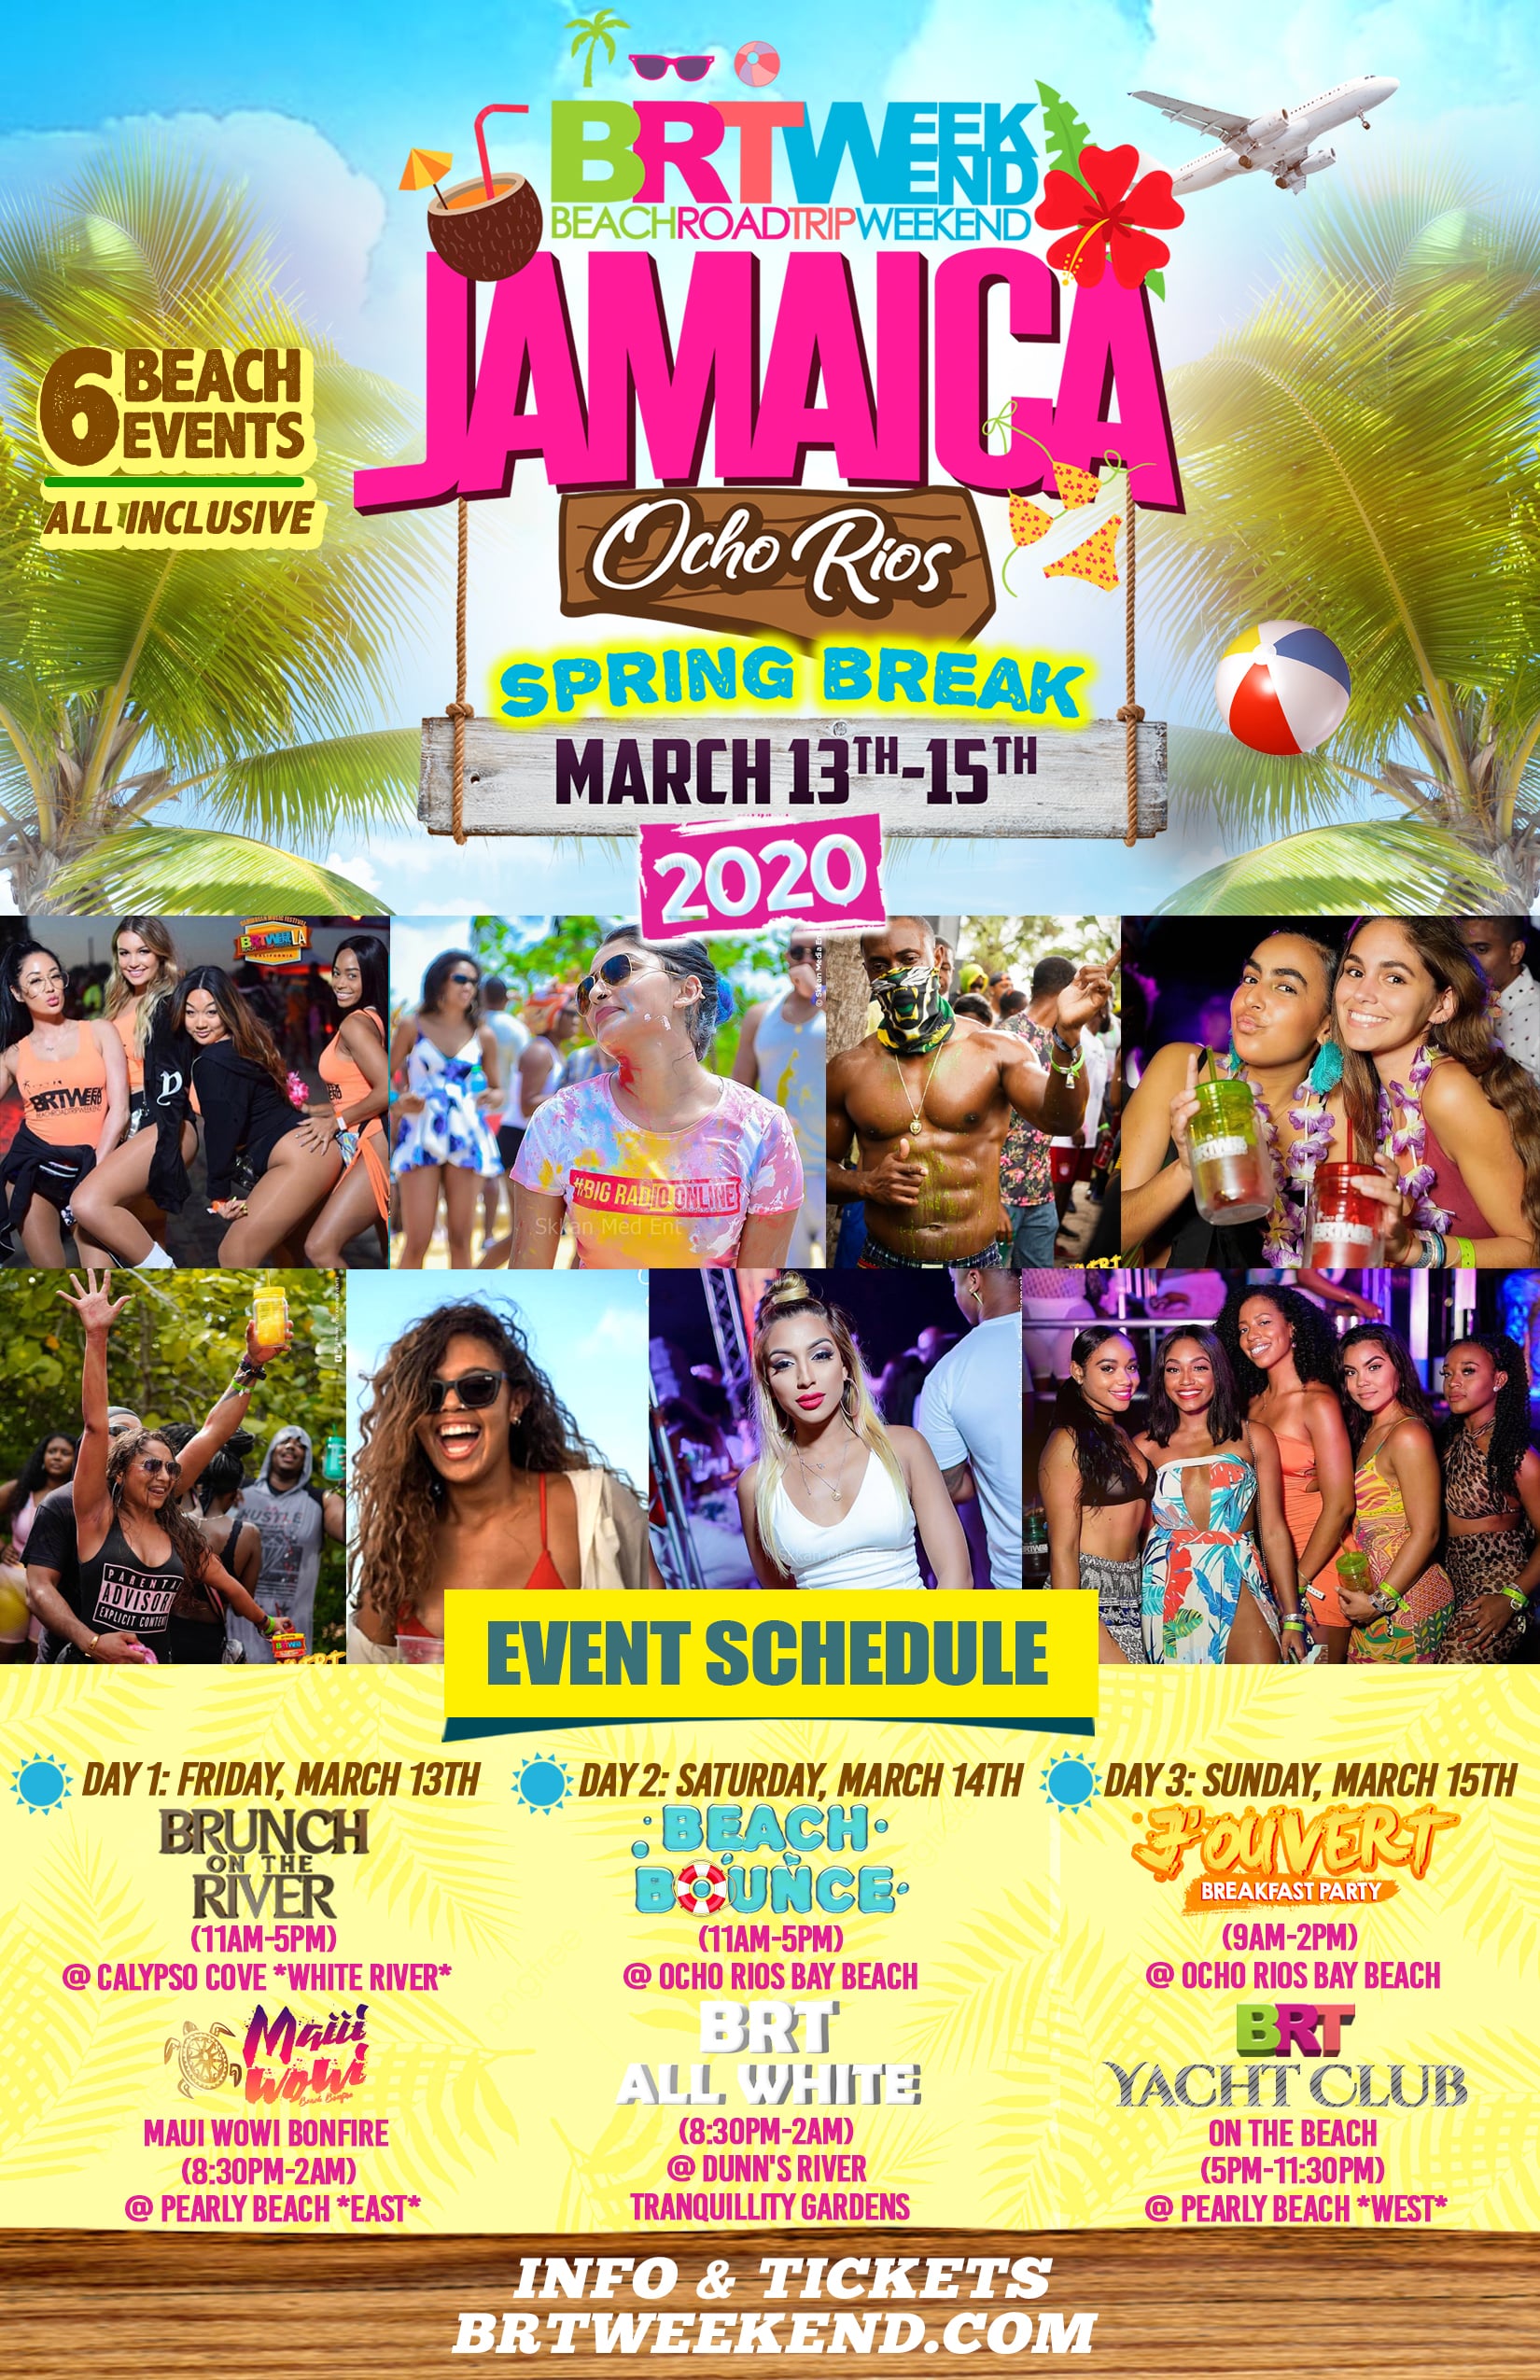 BRT Weekend "JAMAICA" 3Day Caribbean Music Festival March 13th15th